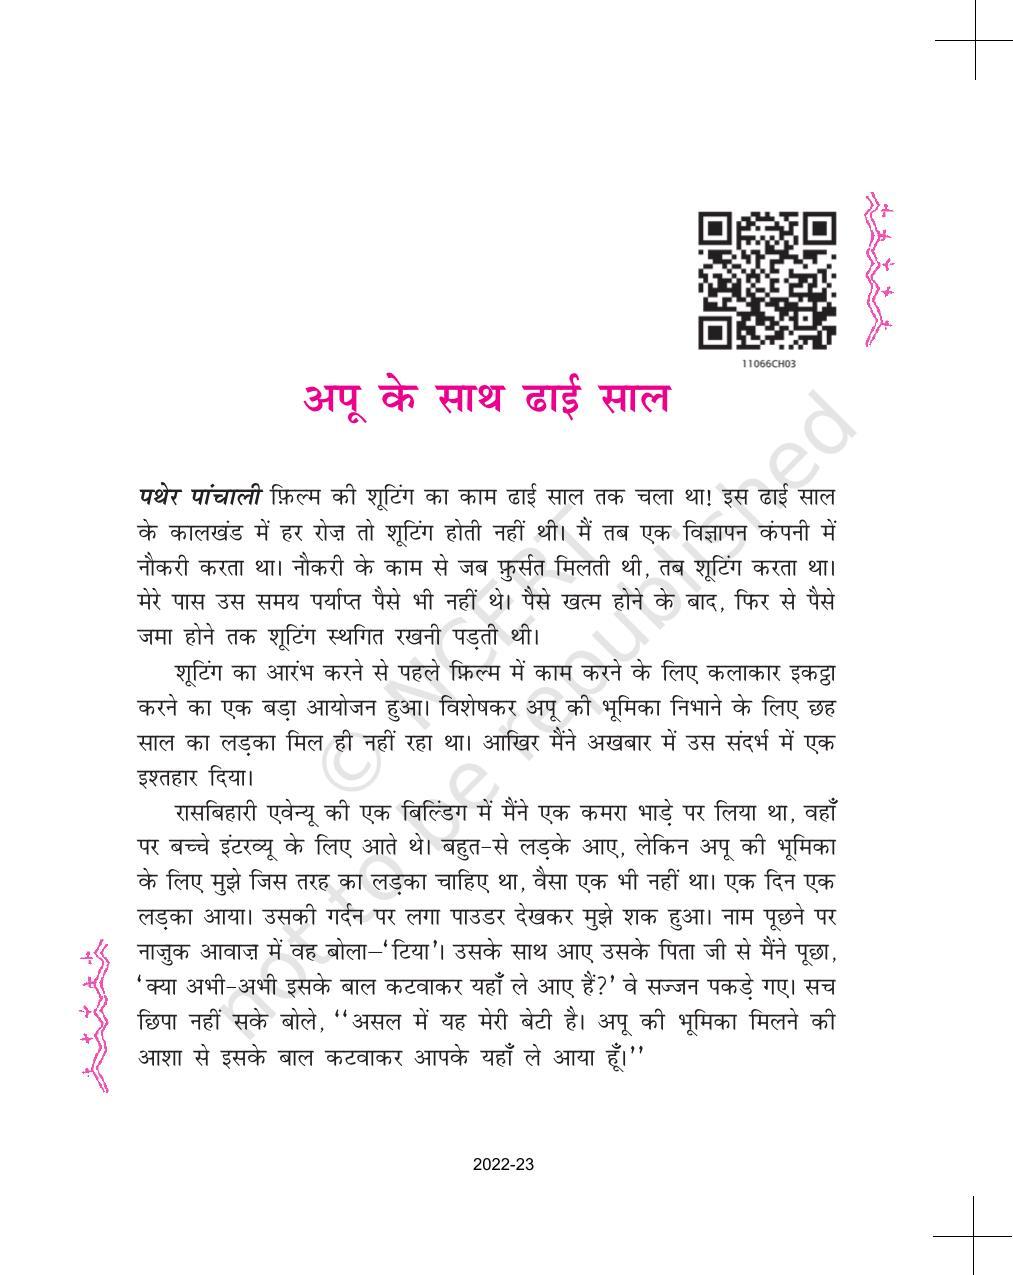 NCERT Book for Class 11 Hindi Aroh Chapter 3 अपू के साथ ढाई साल - Page 3